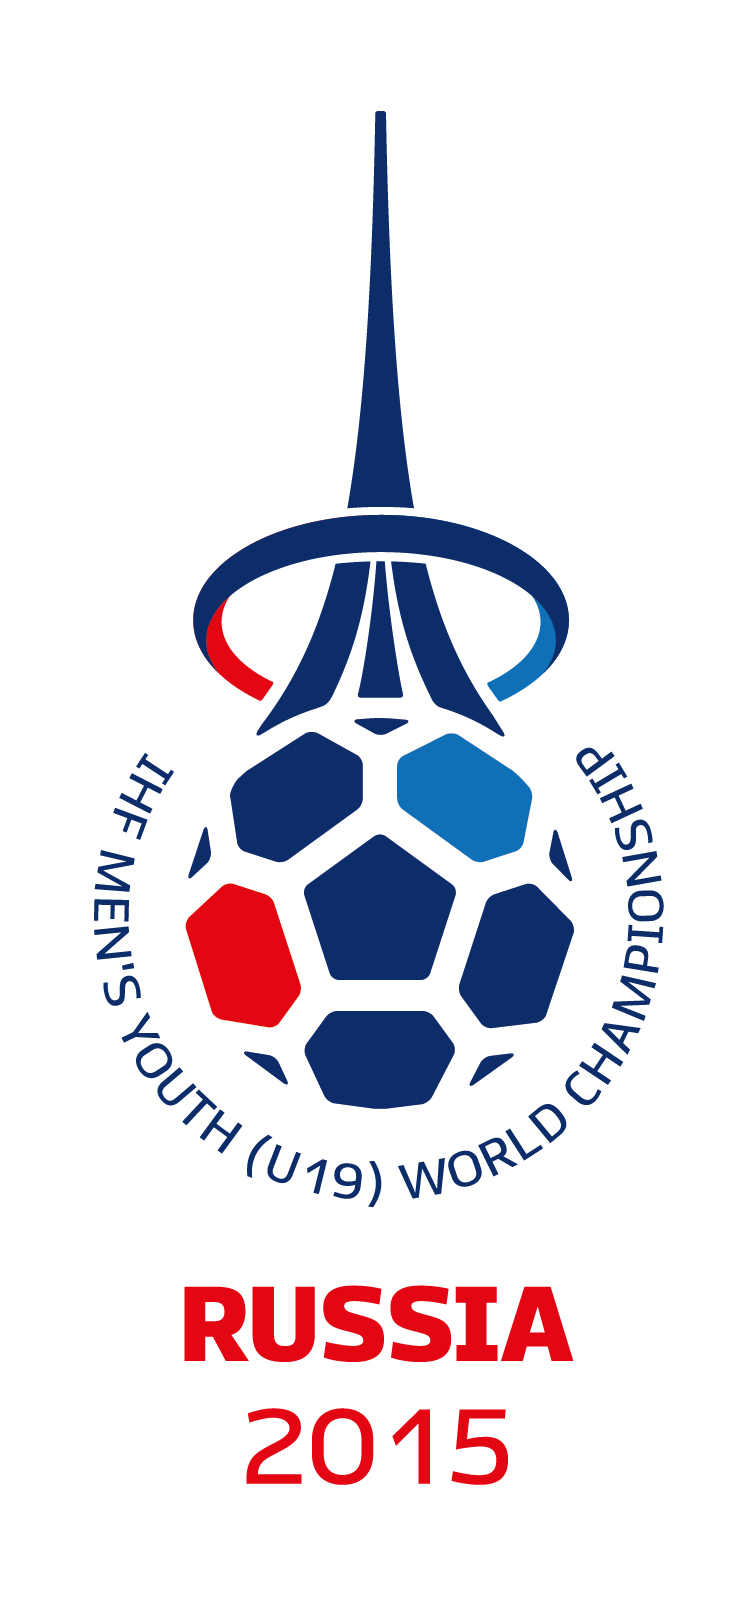 Men's Youth World Championship, RUS 2015